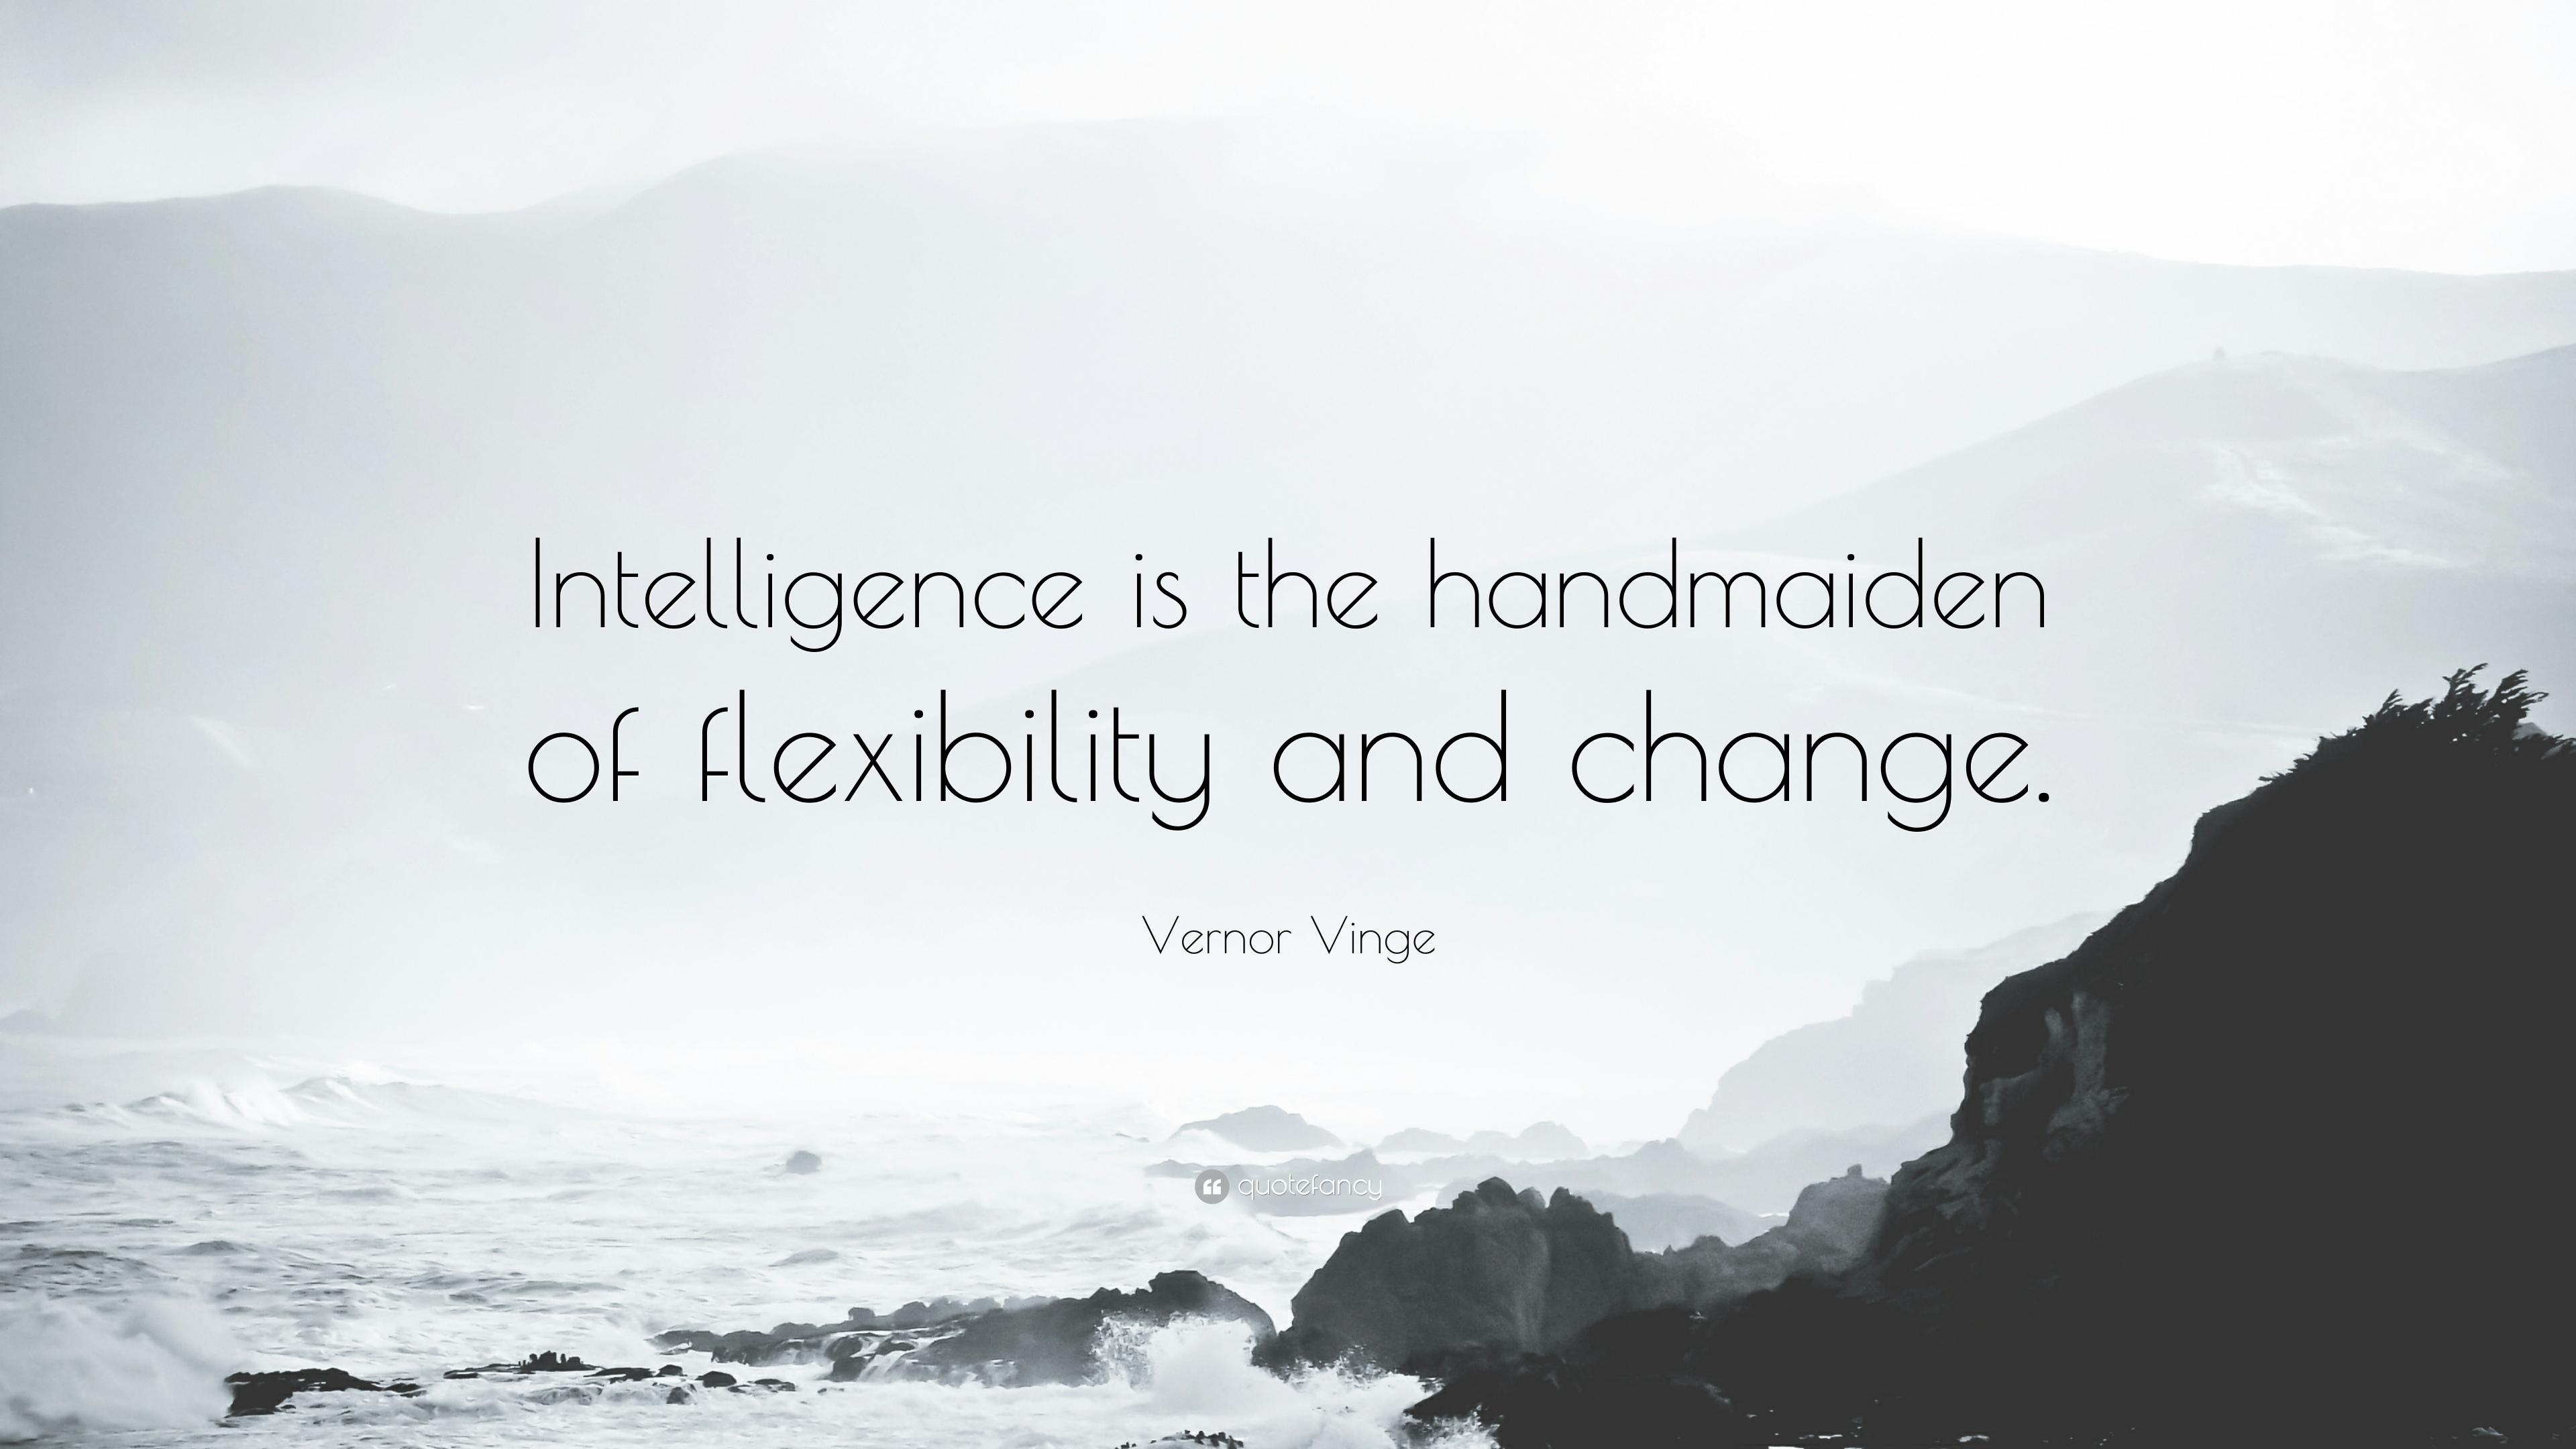 Vernor Vinge Quote: “Intelligence is the handmaiden of flexibility